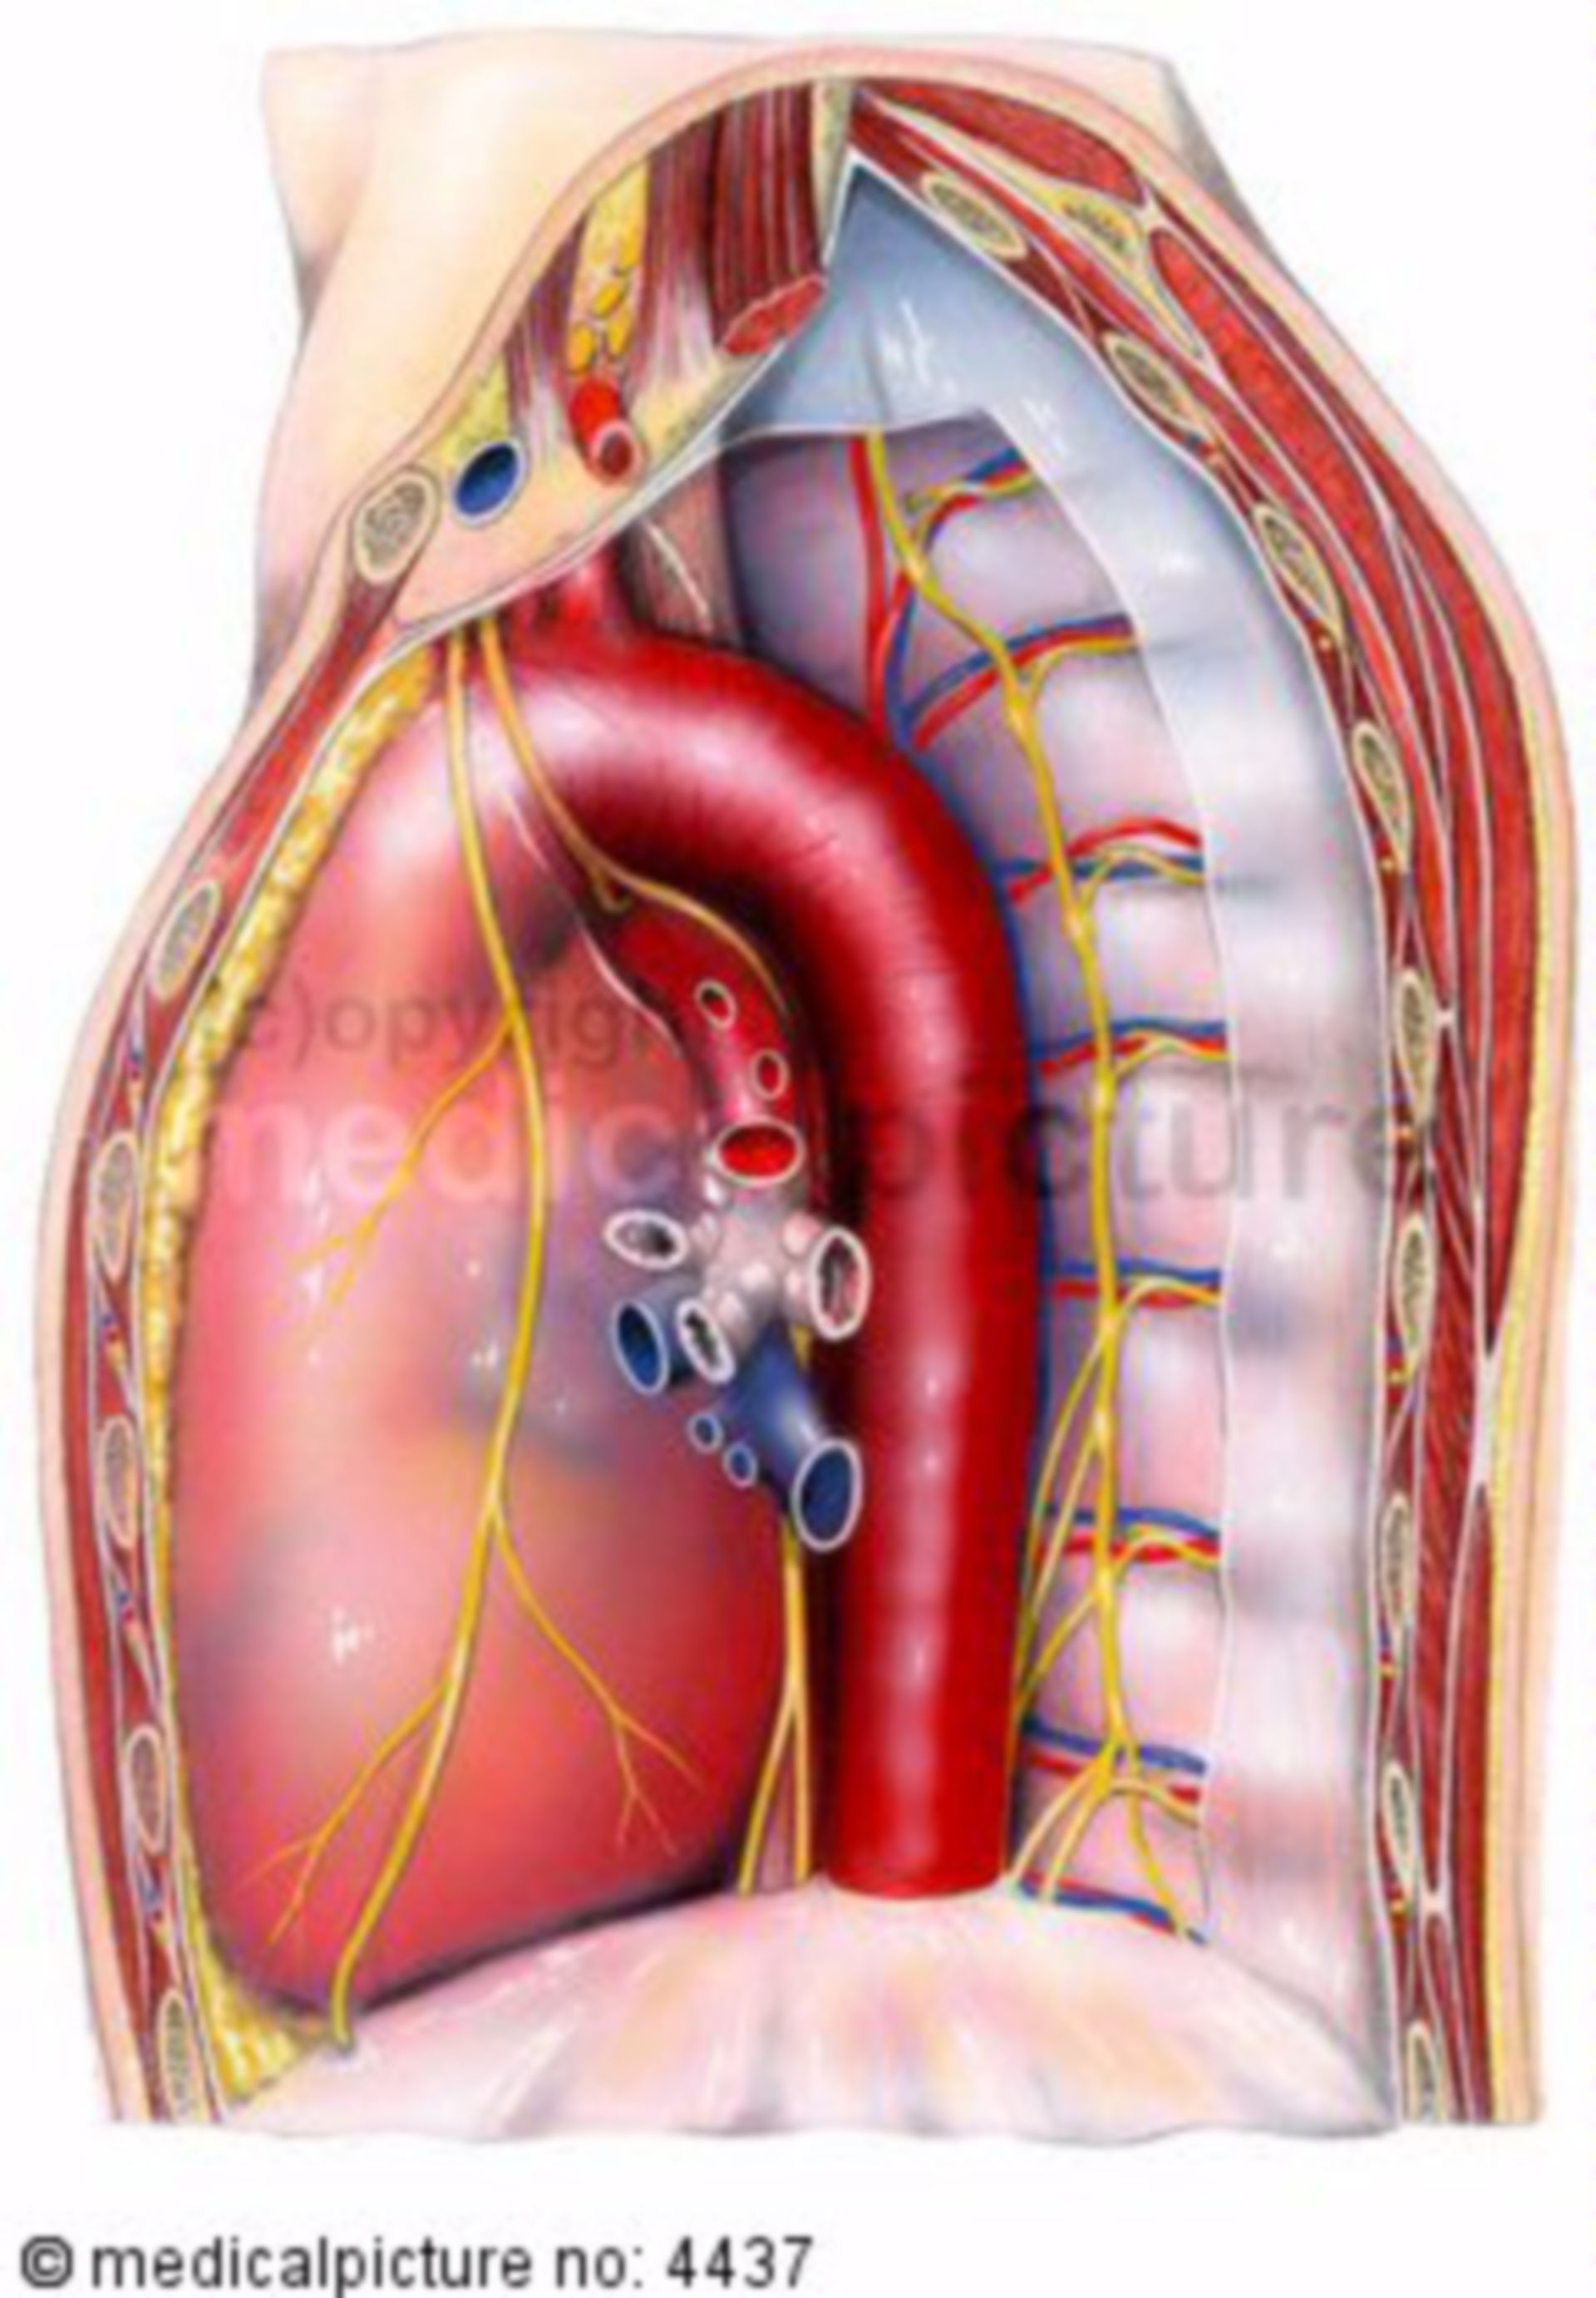 Heart, lateral thorax, pericardium